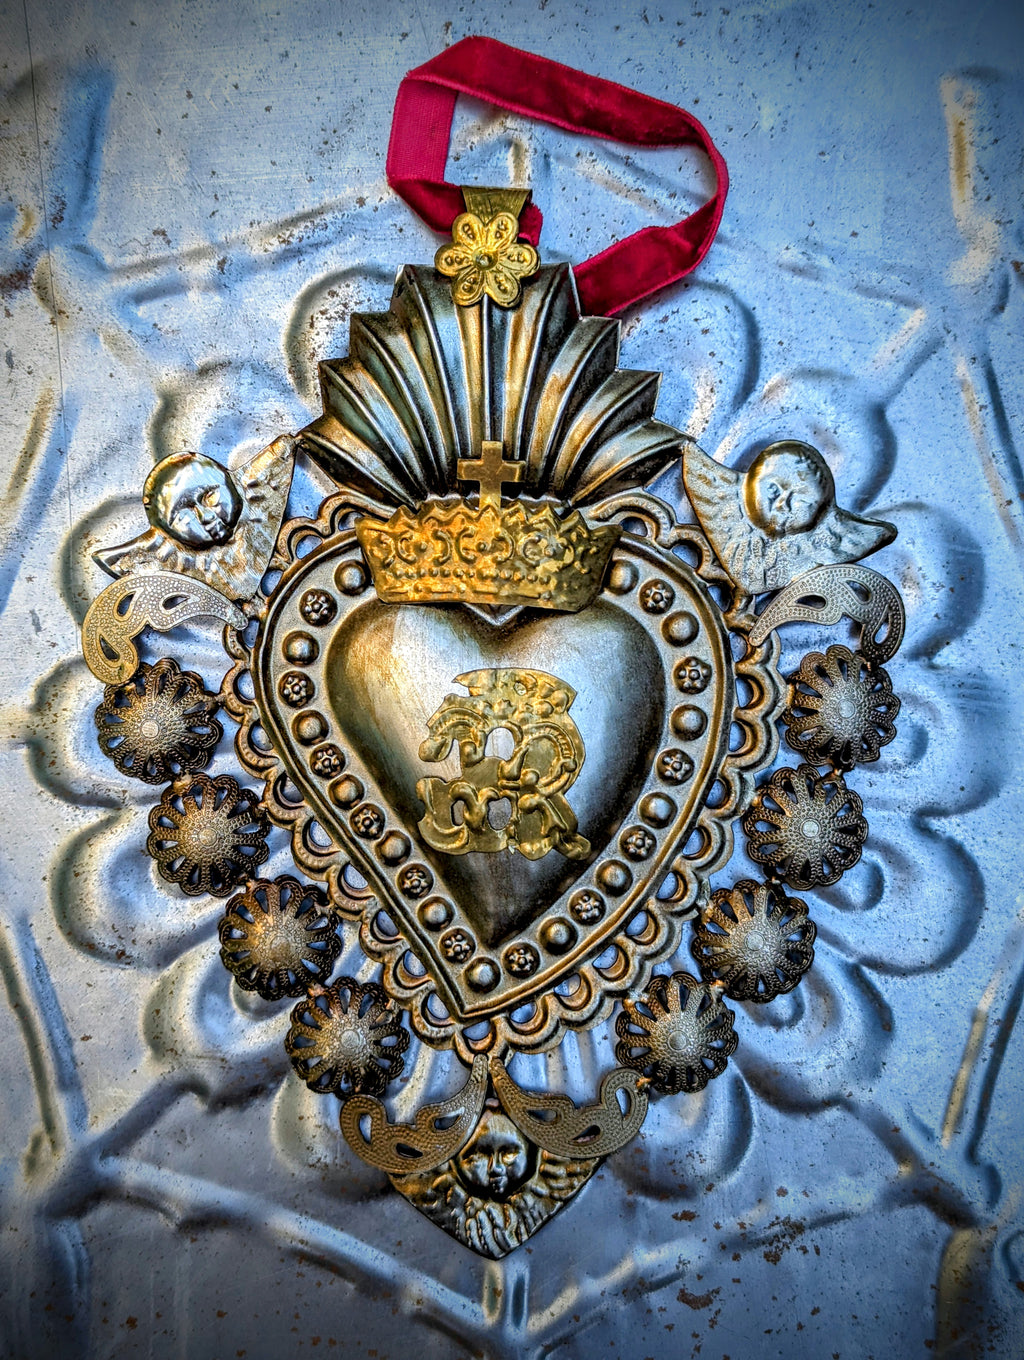 Antiqued tin sacred heart milagros
Chehoma